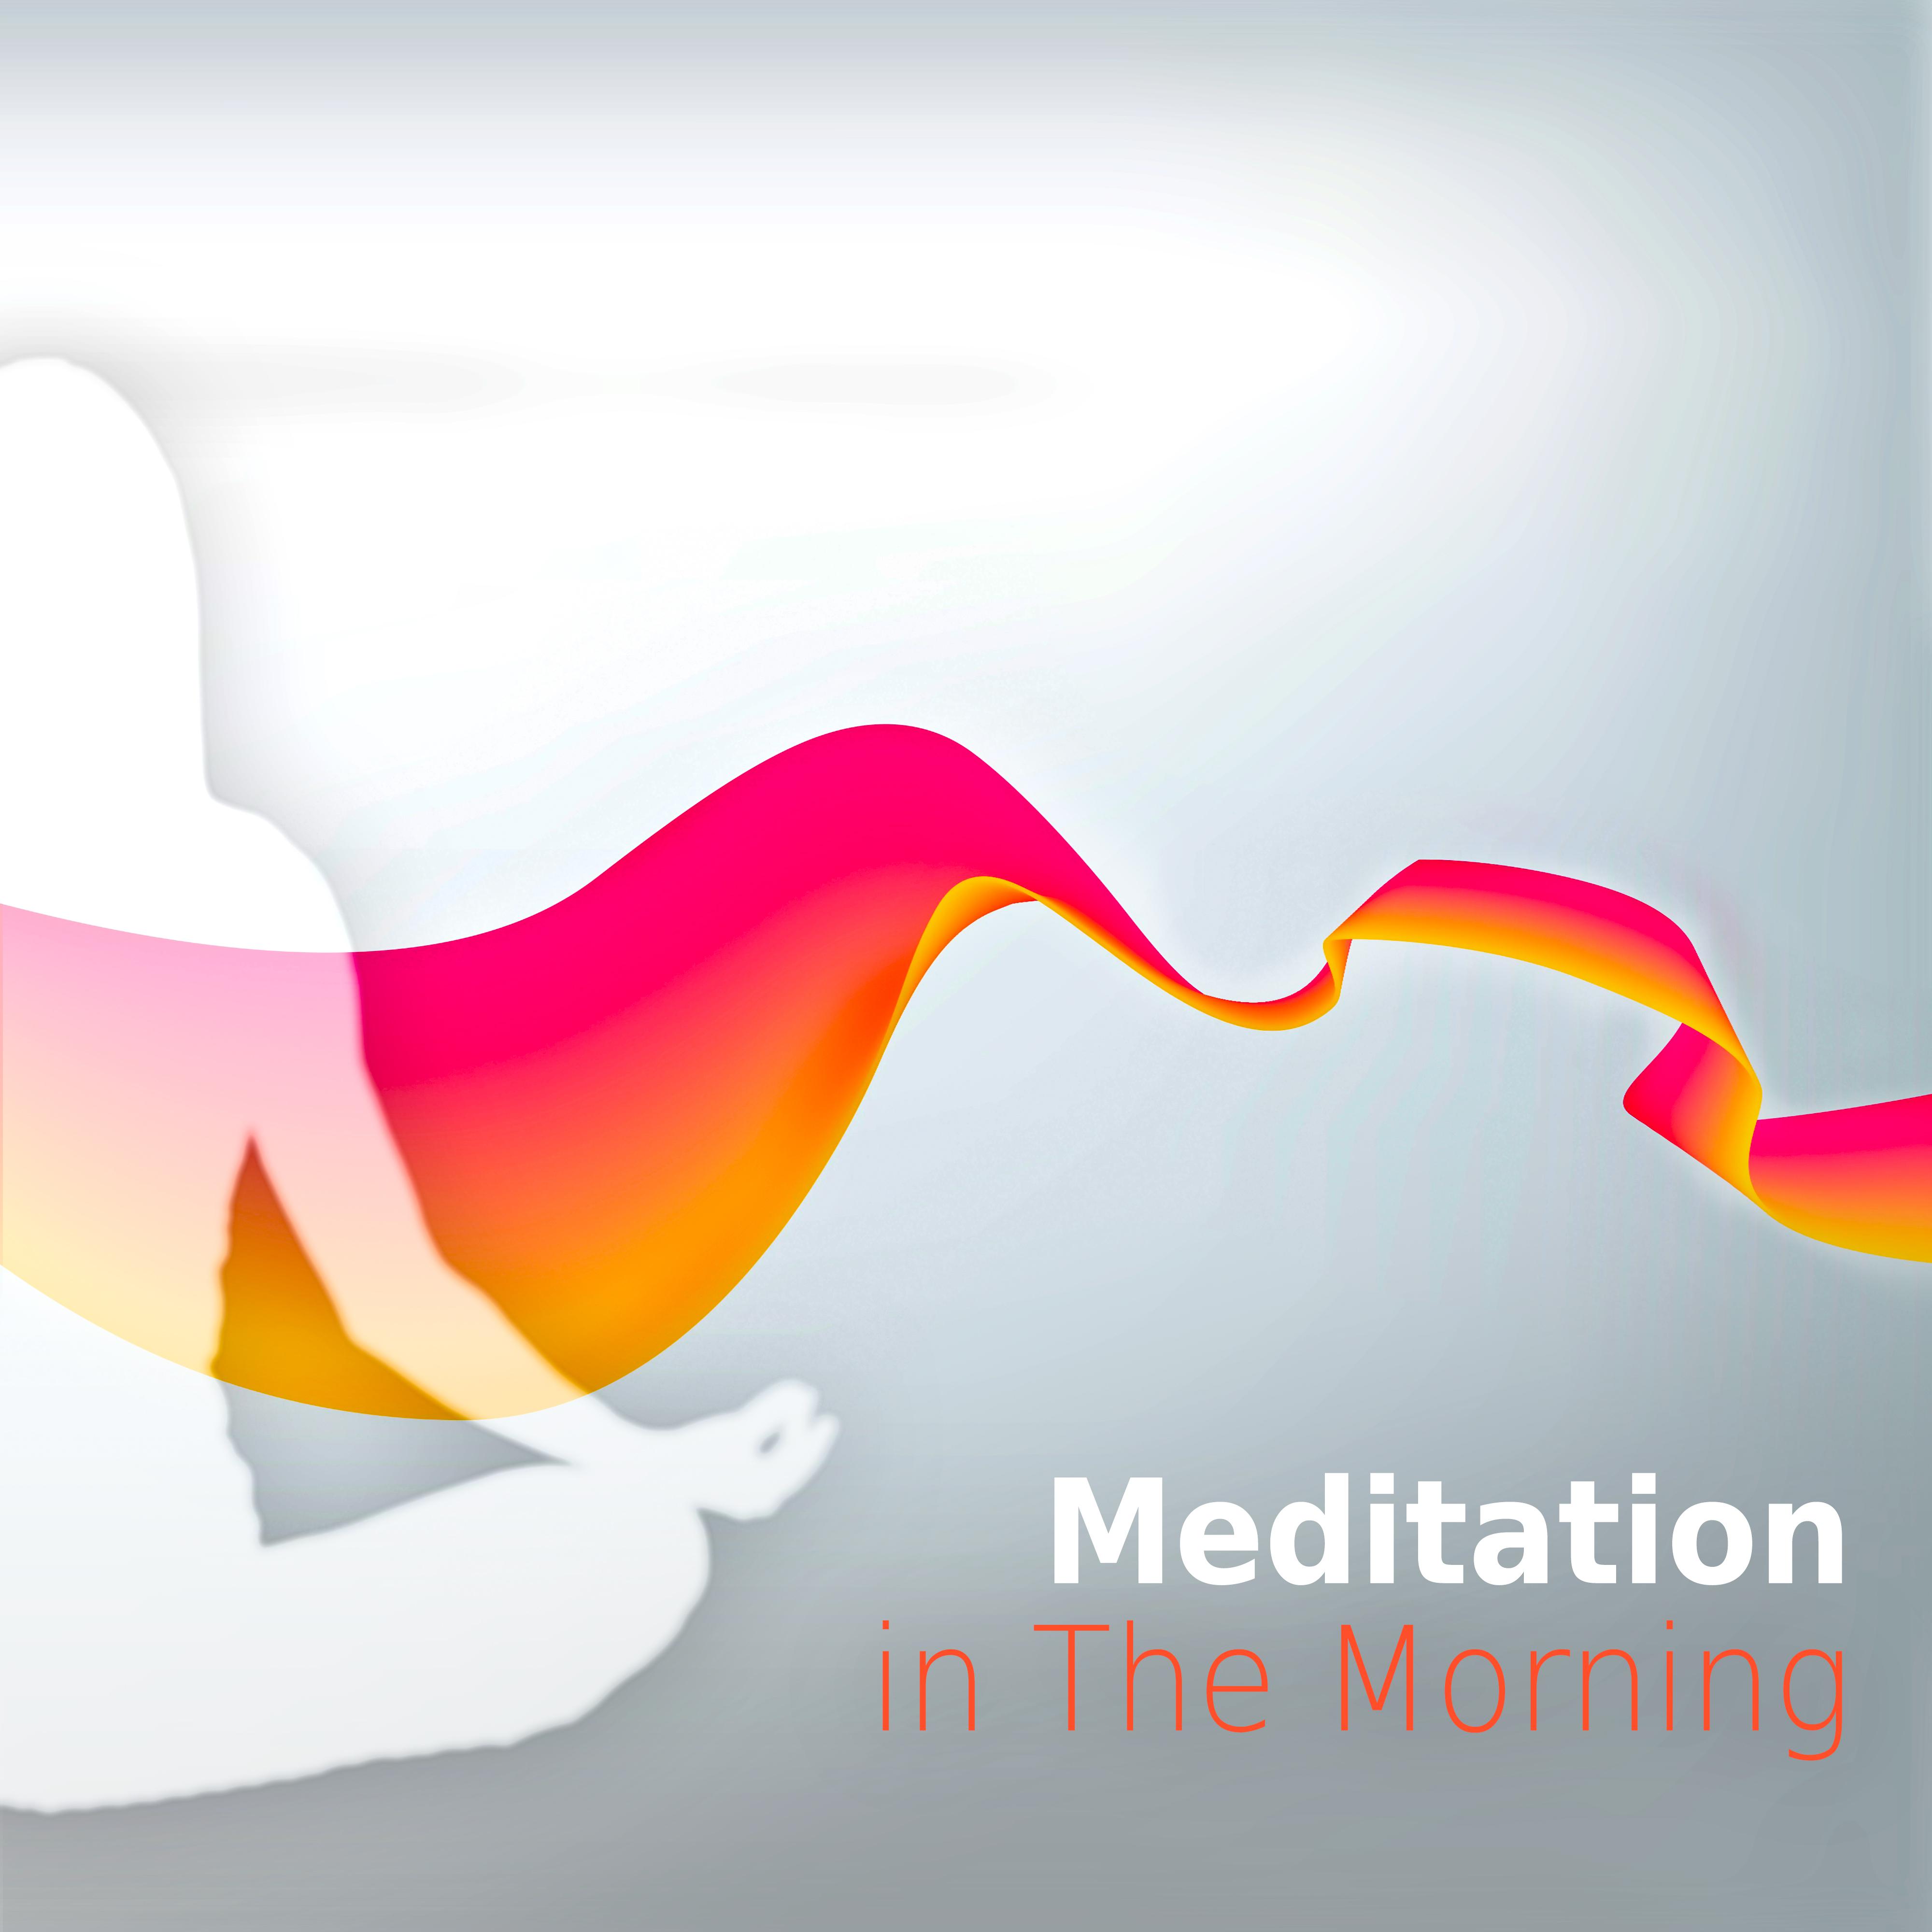 Meditation in The Morning – Yoga Music, Surya Namaskar, Asana Positions, Meditation and Relaxation Music, Welness and SPA